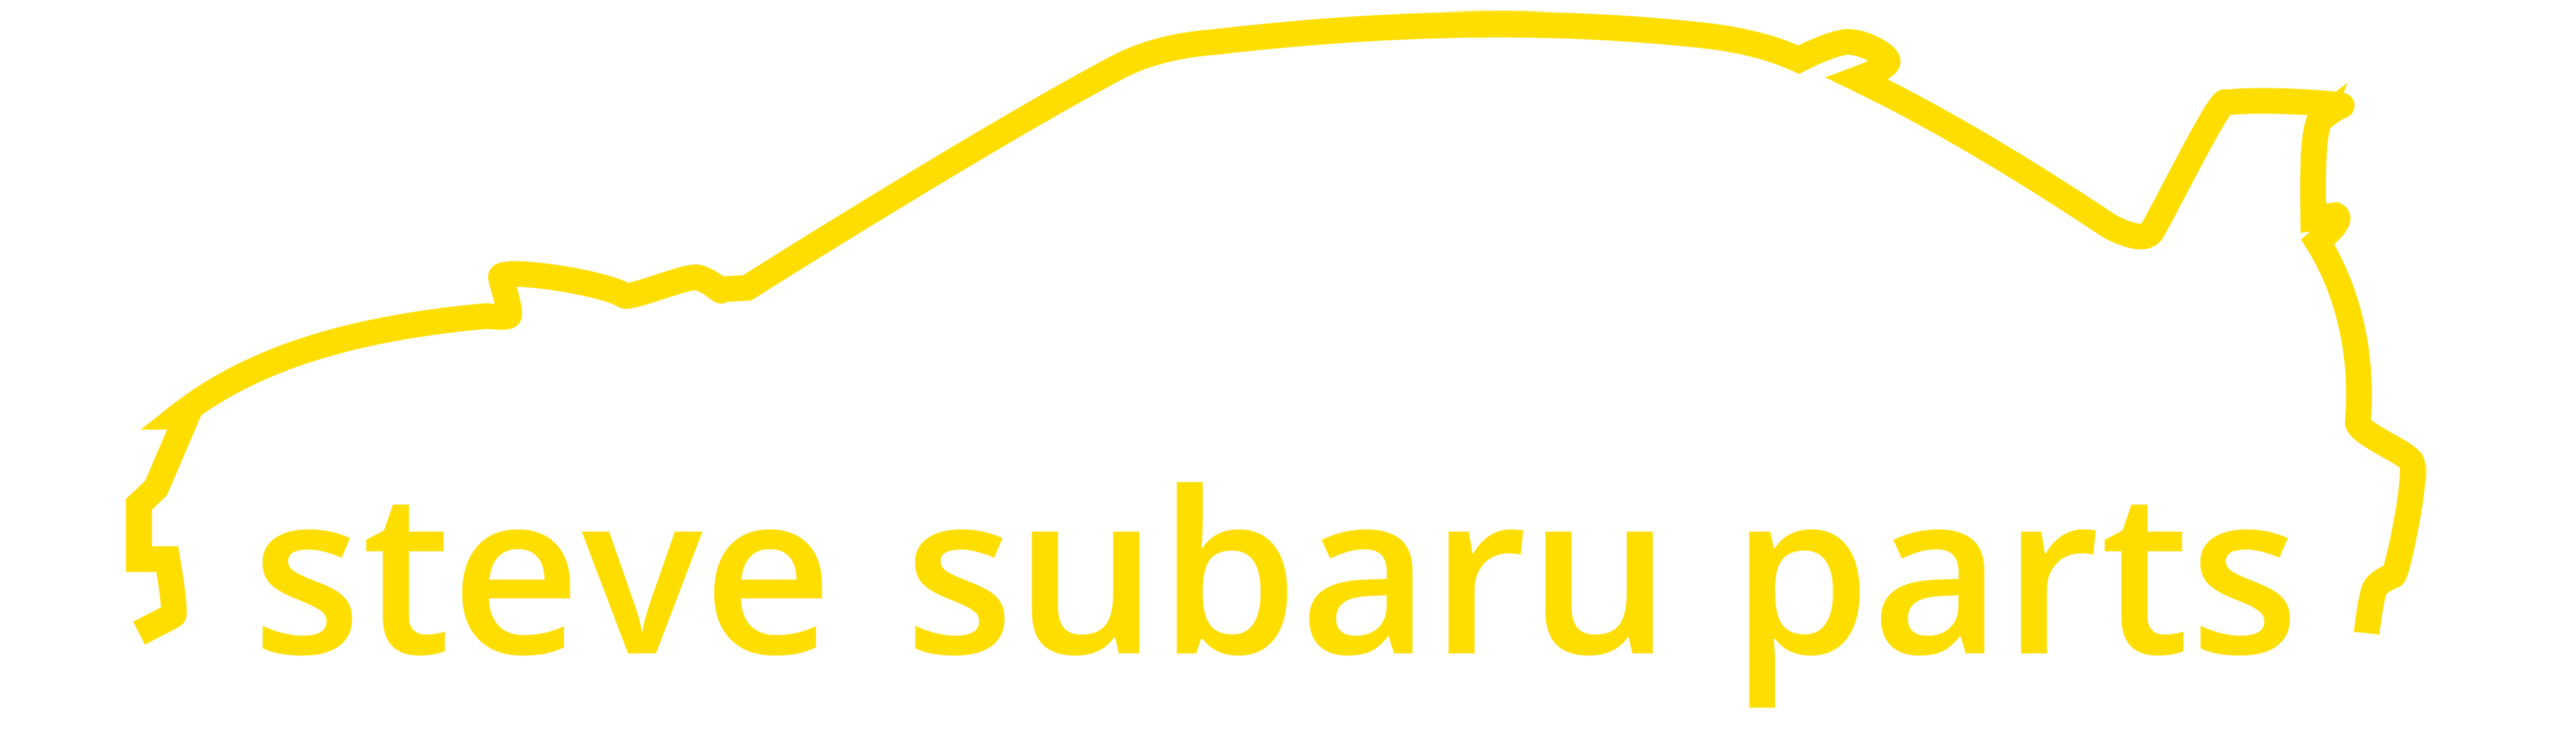 Subaru Impreza Logo - Genuine Used Subaru Impreza Parts. Car Parts. Steve Subaru Parts